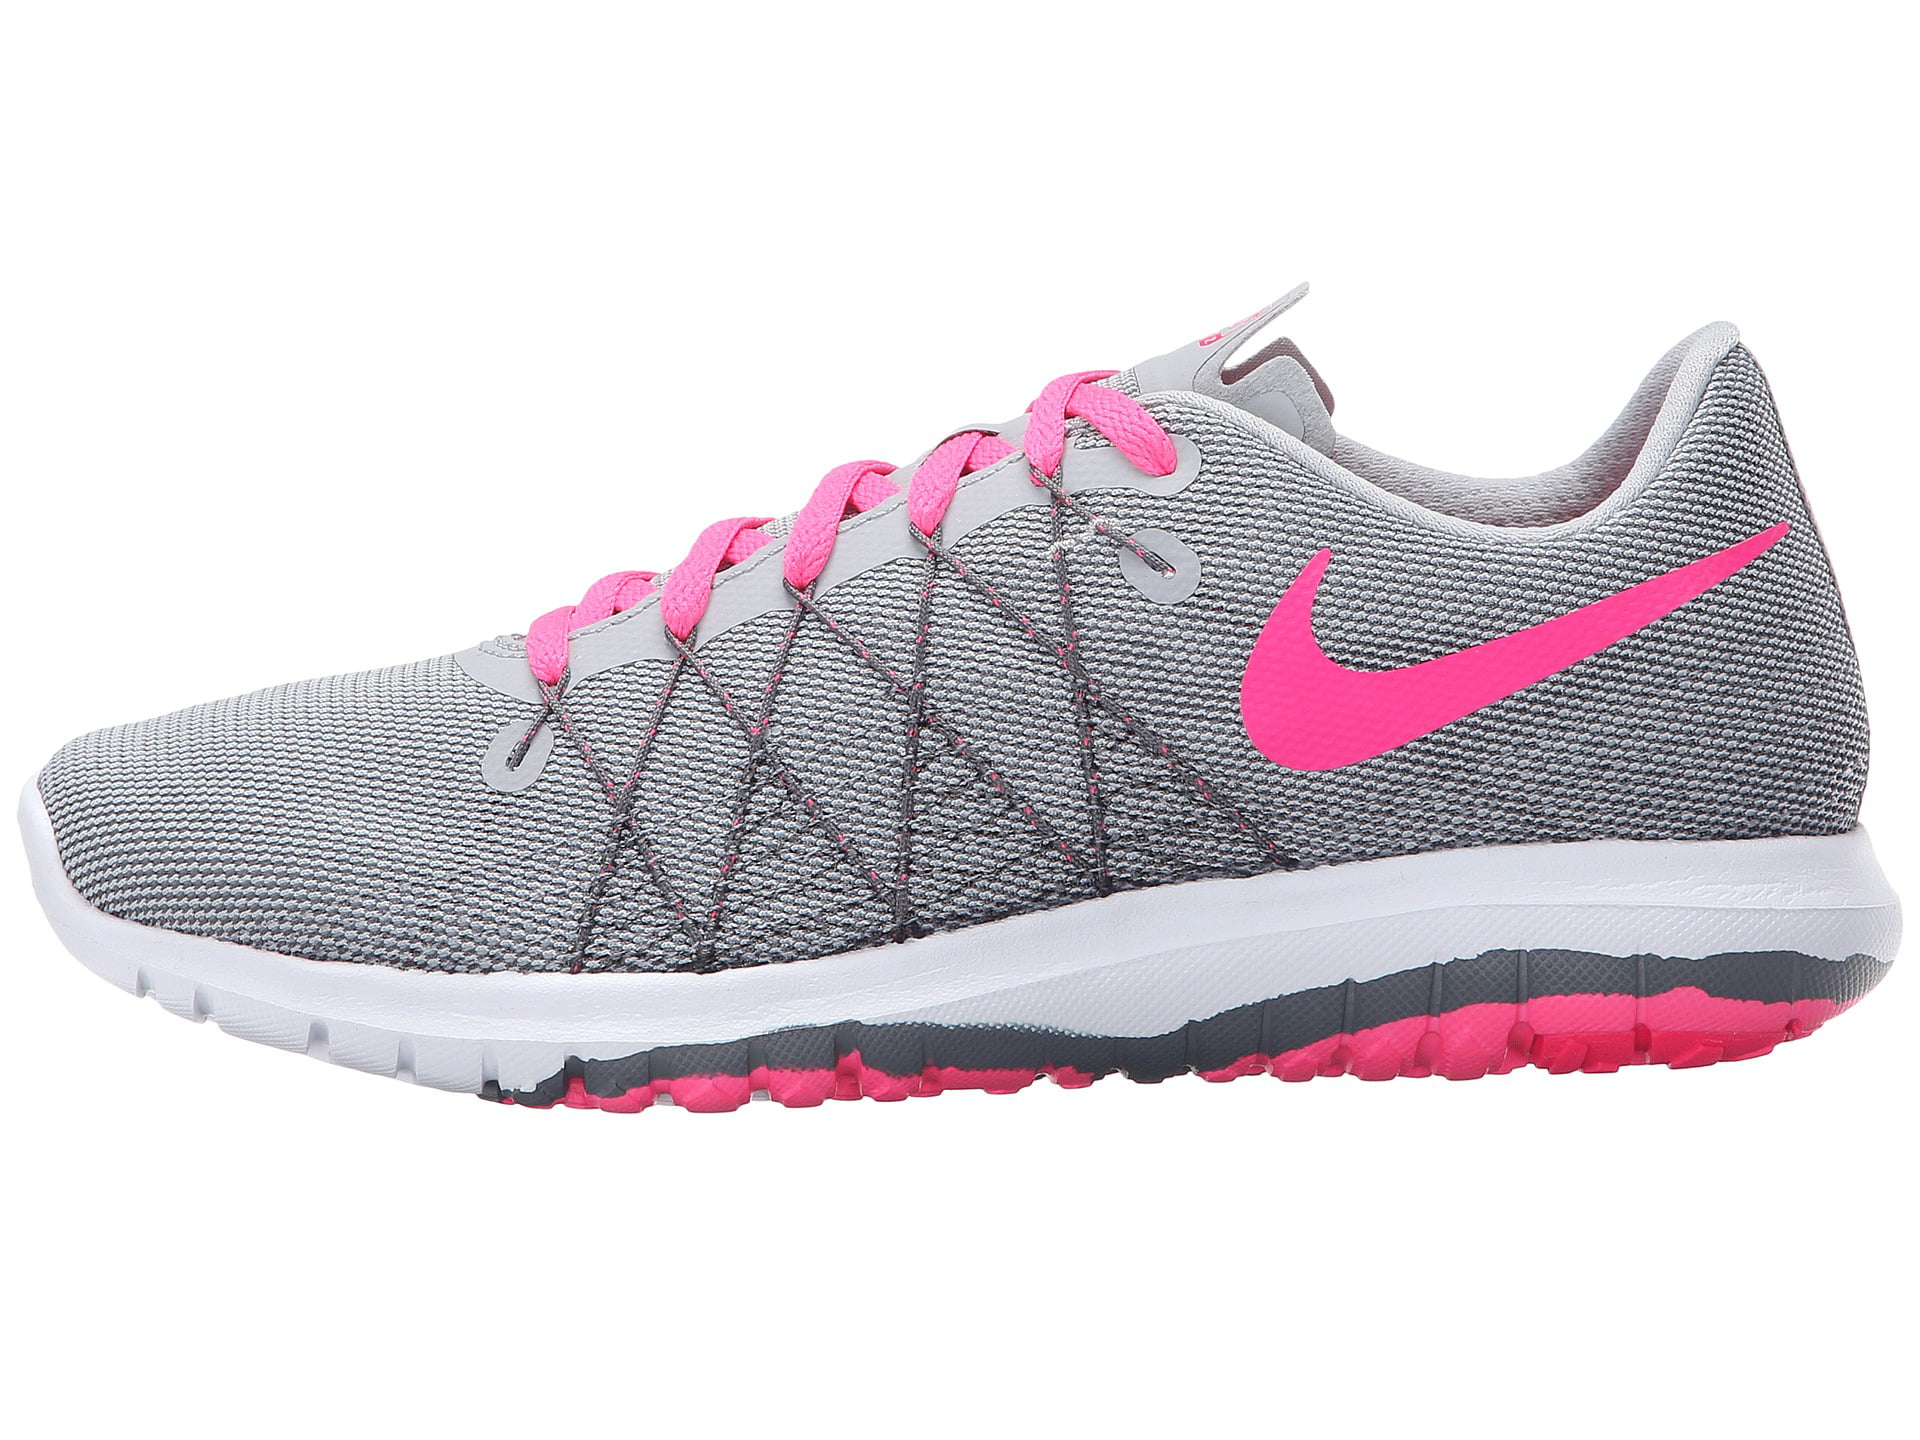 Nike 2 Running Shoes-Wolf Grey/Hyper Pink - Walmart.com